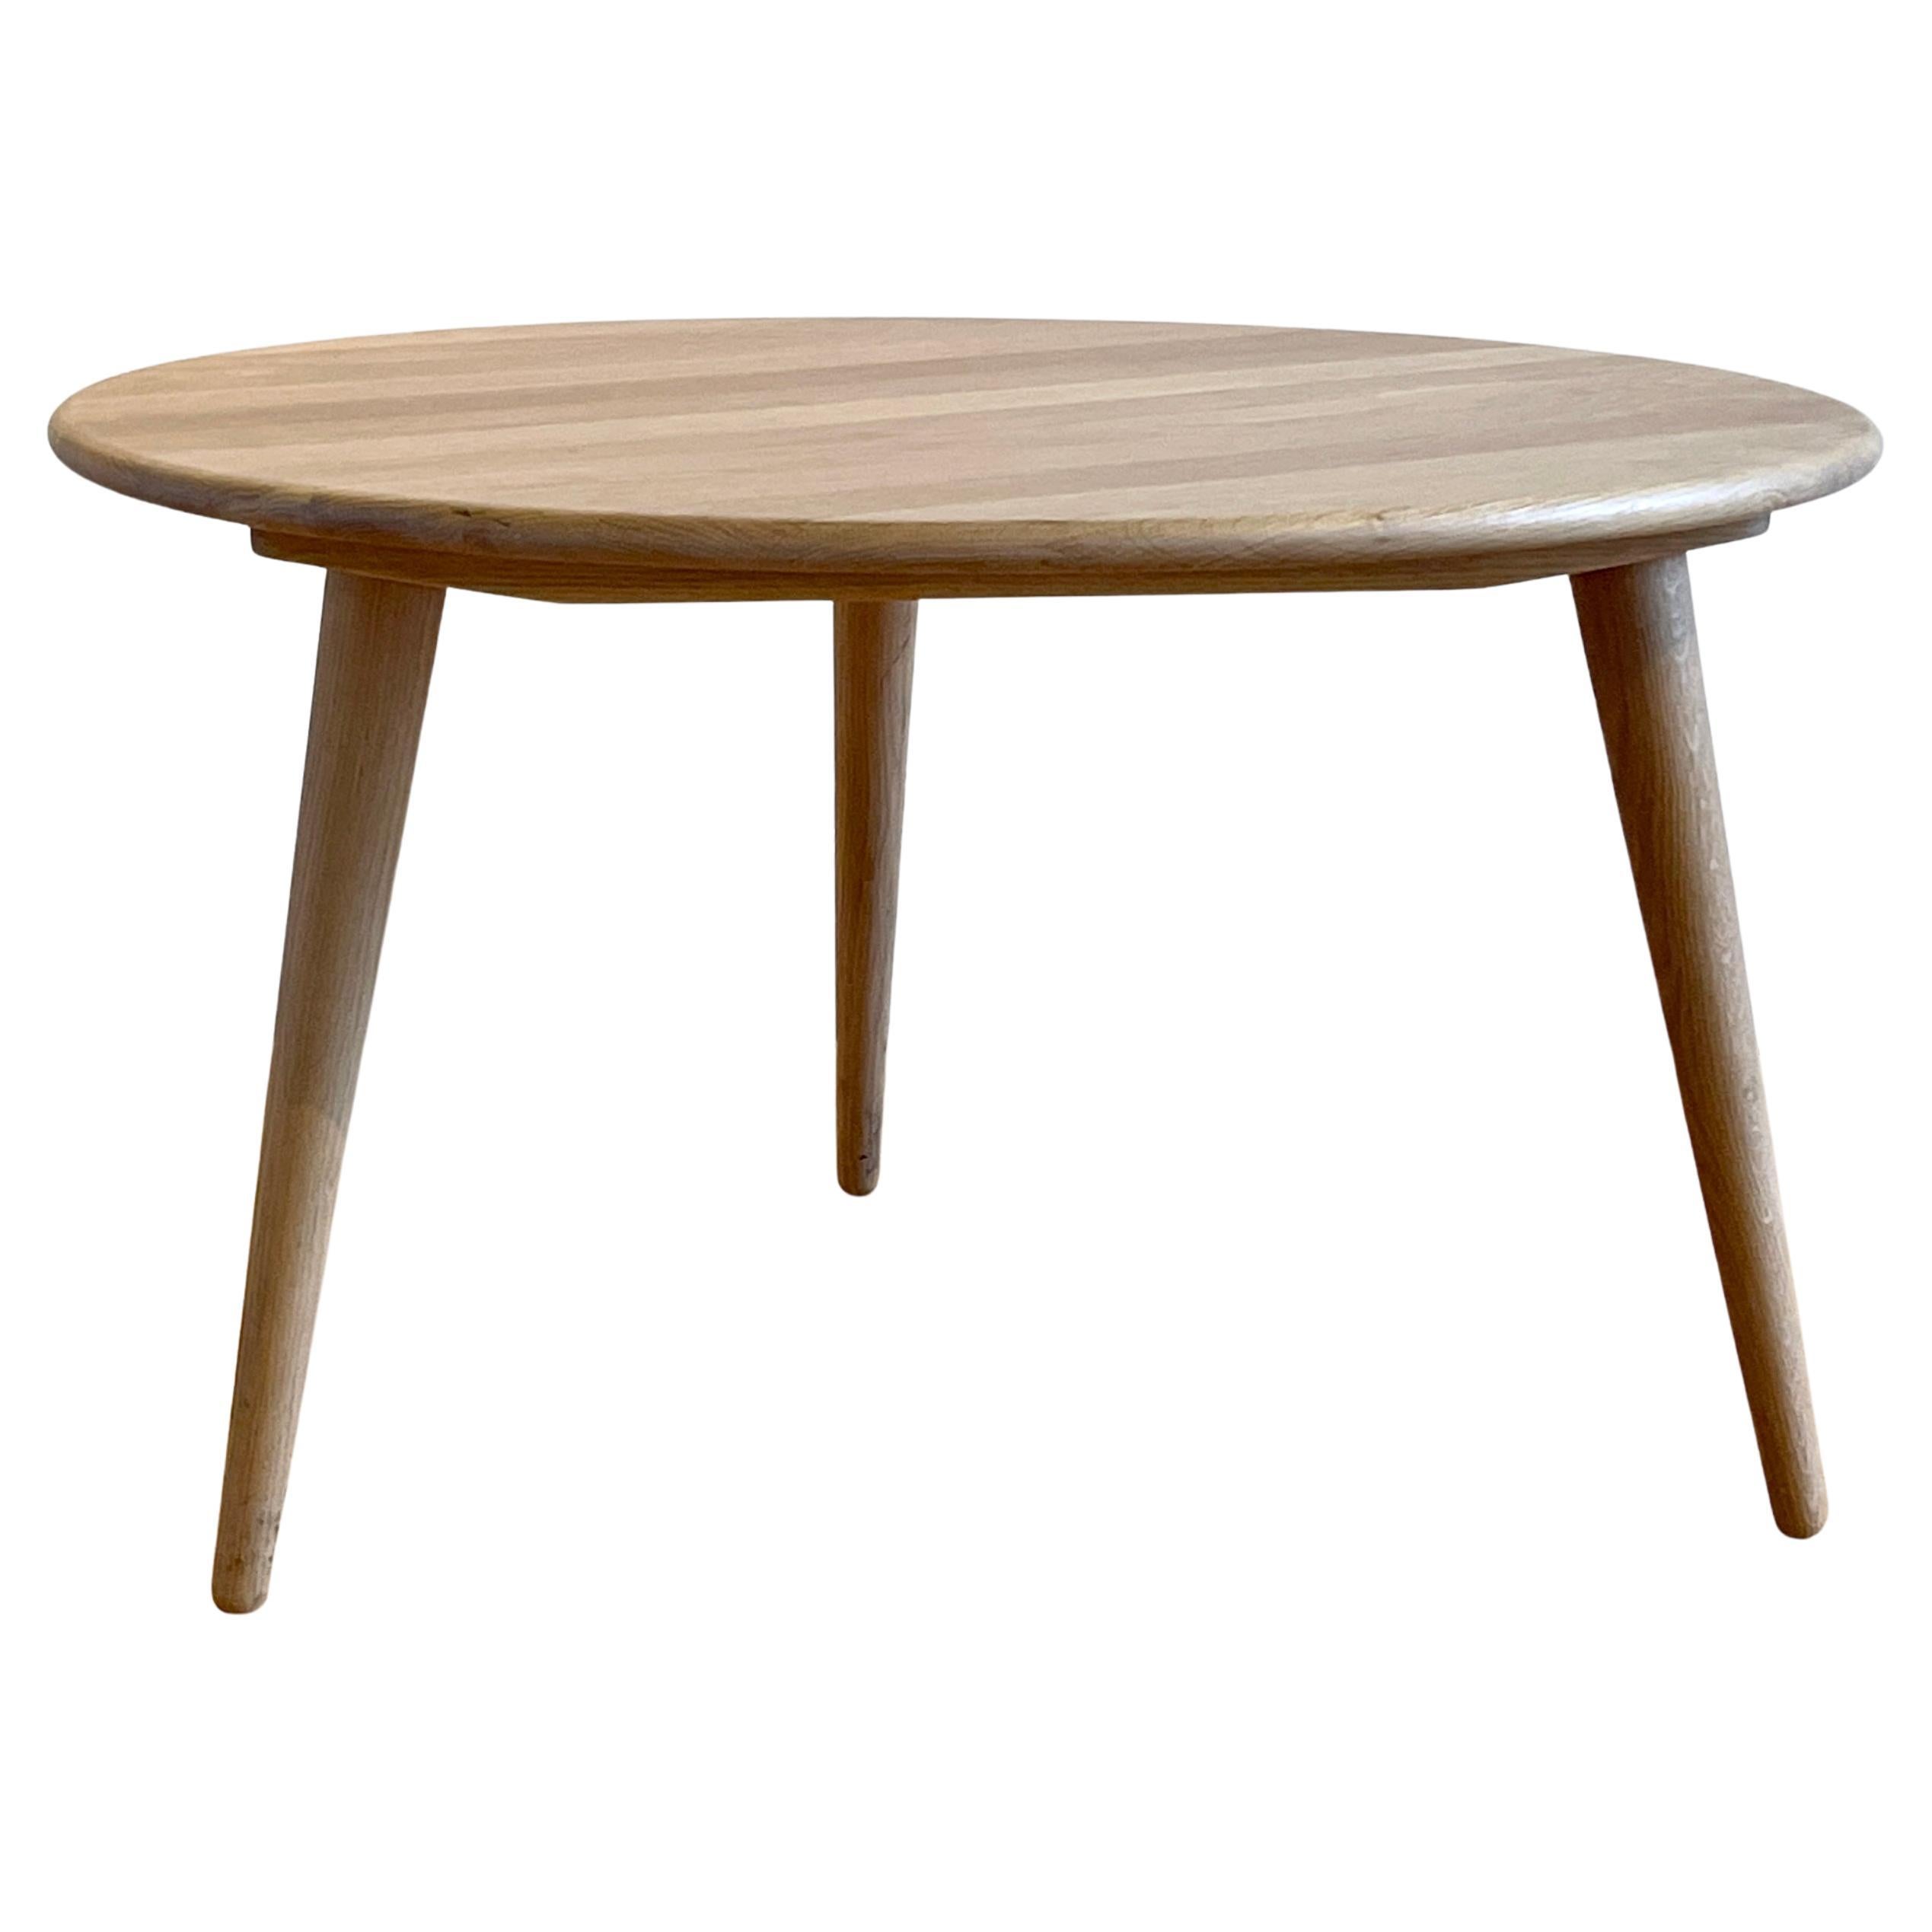 CH008 Oiled Oak Round Coffee Table Hans Wegner, Carl Hansen & Son 1954 Design